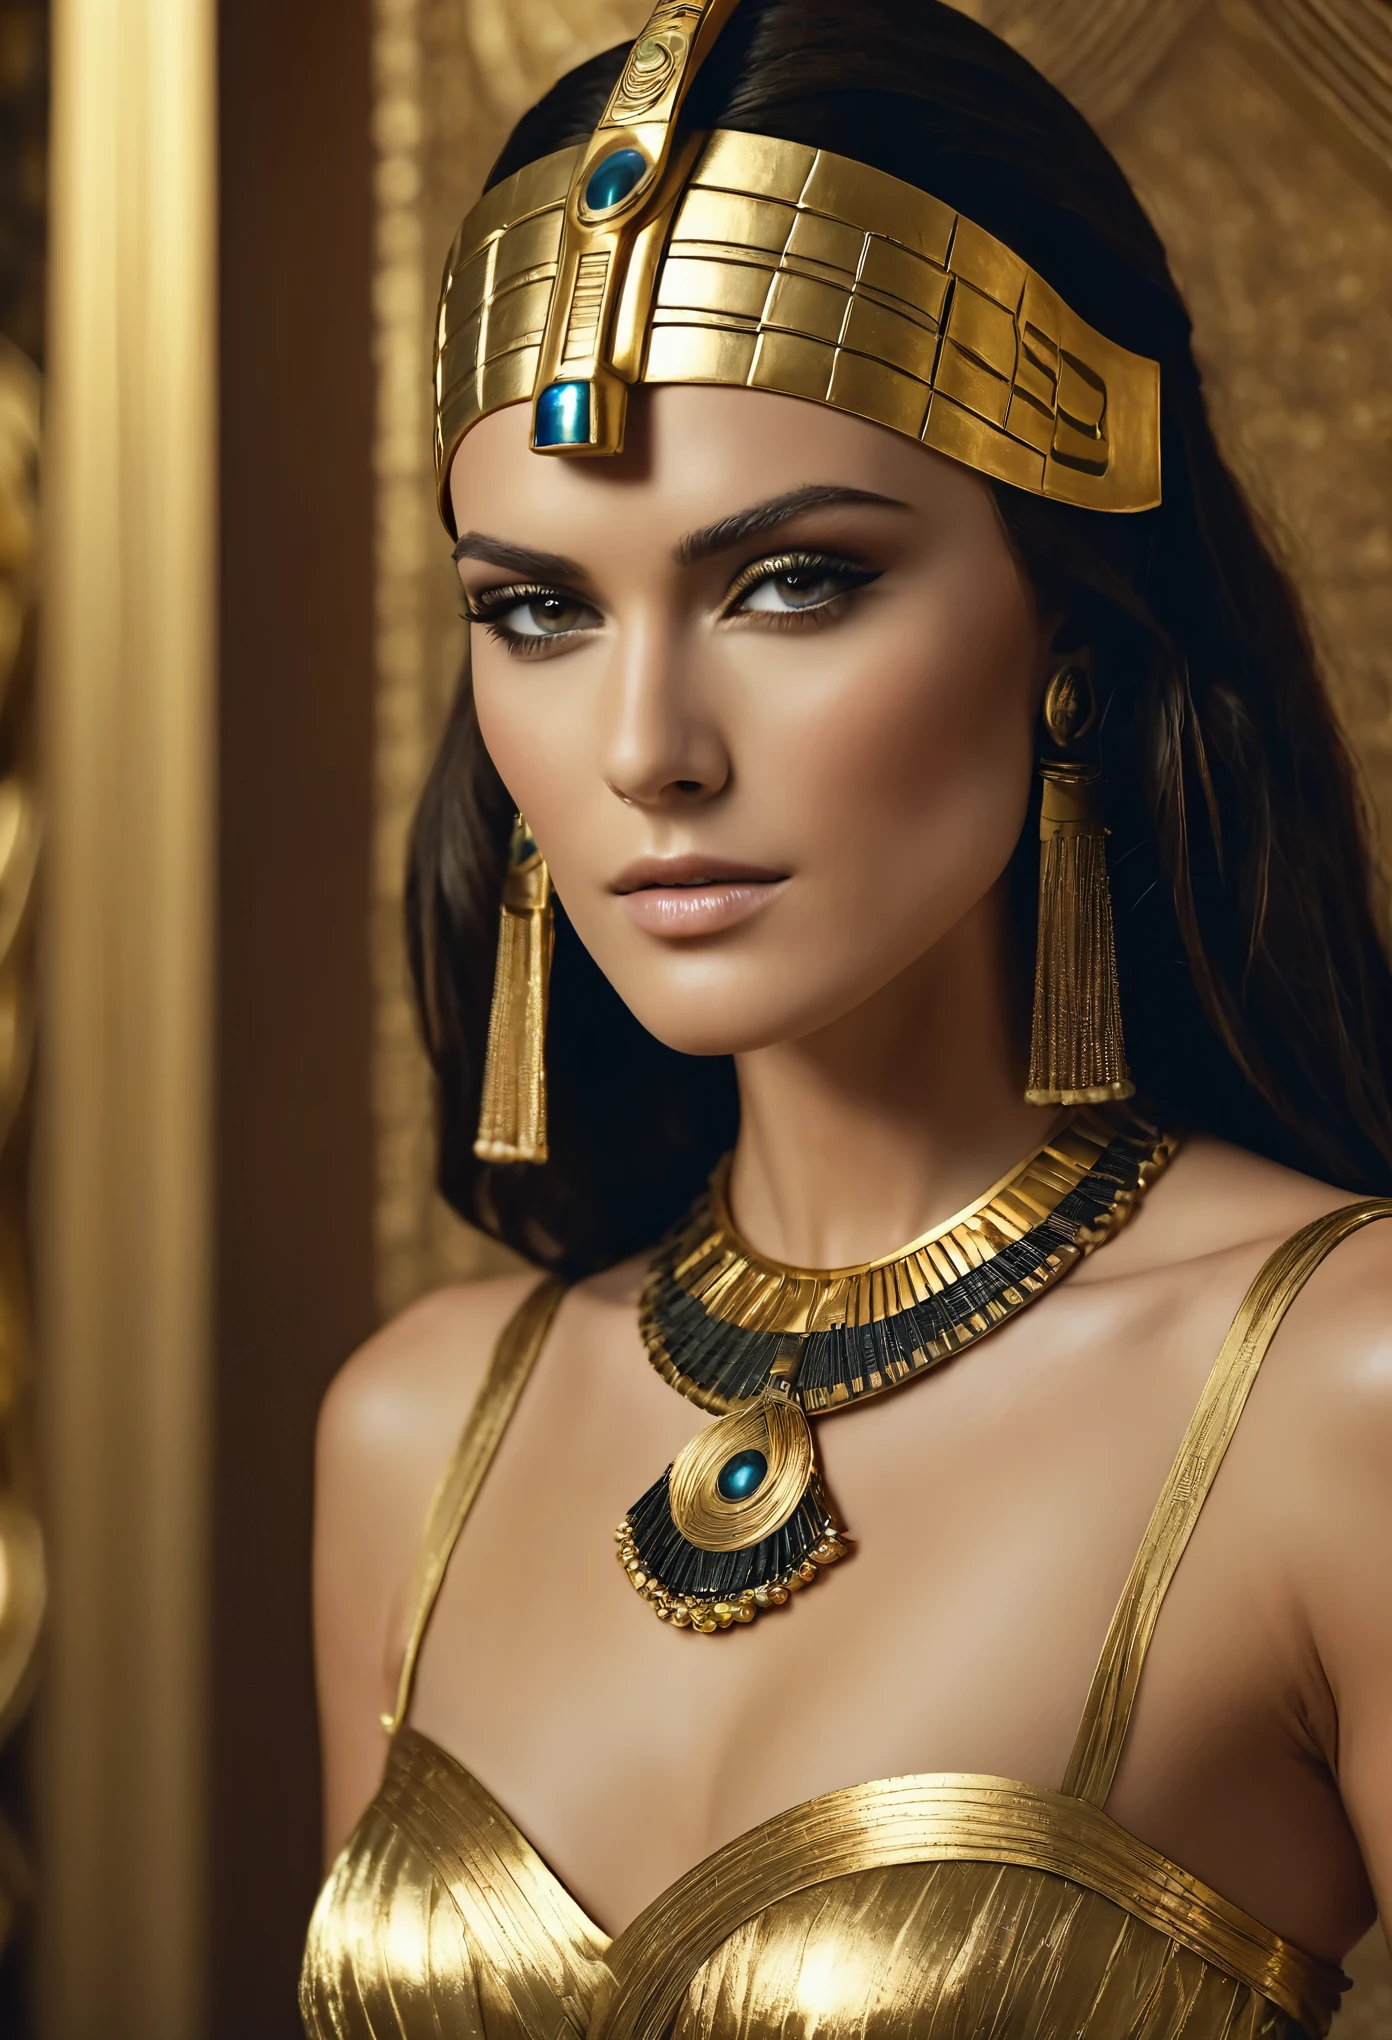 Gorgeous 클레오파트라, 도발적인 인물, 매력적인 인물, 에로틱하고 감각적인 이집트 의상, 미친 세부 사항, thick 매력적인 인물, 부피가 큰 인물, 이집트 사람 princess, cinematic 여신 close shot, 클레오파트라, 정말 아름다운 아가씨, cinematic 여신 body shot, 클레오파트라 portrait, 여신, 놀라운 아름다움, 극도로 높은 디테일, 이집트 사람, 클레오파트라 in her palace, cinematic 여신 shot, 이집트 사람 style, extremely 상세한 여신 shot, beautiful 여신, 영화적 초상화, 전문 영화 촬영법, 이집트인으로서, 키이라 나이틀리 아름답고 멋진 파라오 키이라 나이틀리, 클레오파트라의 초상화, UHD, 8K, 32K, 상세한, 뒤얽힌, 날카로운 아름다움, 고화질, 영화적 관점, 결점이 없는 이미지, 고대 이집트의 배경금색 드레스와 이집트 마스크를 쓴 여성의 클로즈업, a 영화적 초상화, 전문 영화 촬영법, 미친 세부 사항, 이집트 공주, a close-up of a cinematic 여신, 클레오파트라, 엄청나게 아름다운 아가씨, and a cinematic 여신 body